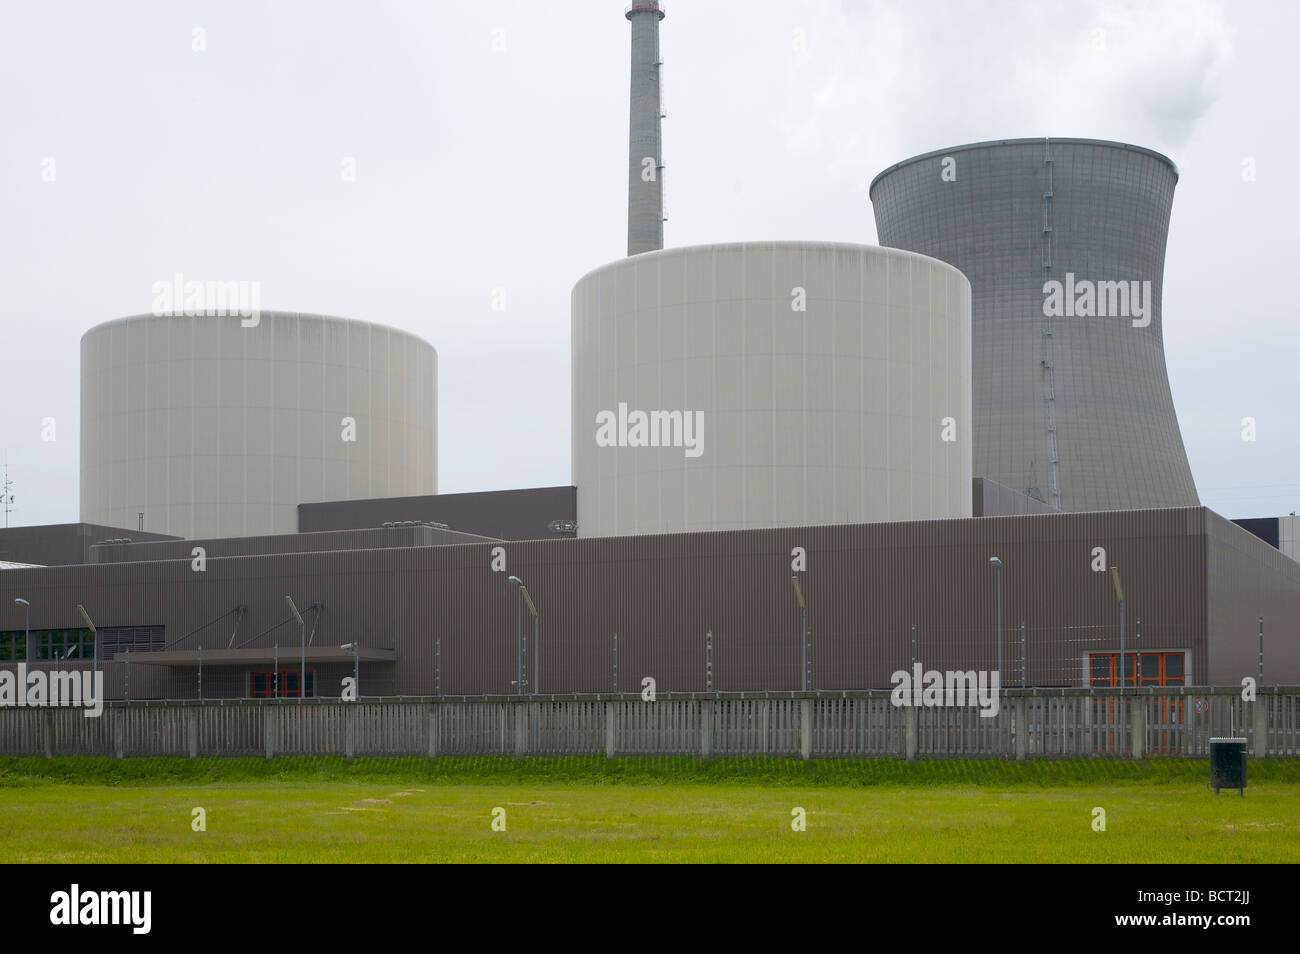 Gundremmingen centrale nucleare in Baviera, Germania. Attivo 2 reattori BWR. La Kernkraftwerk Gundremmingen, Bayern, Deutschland. Foto Stock